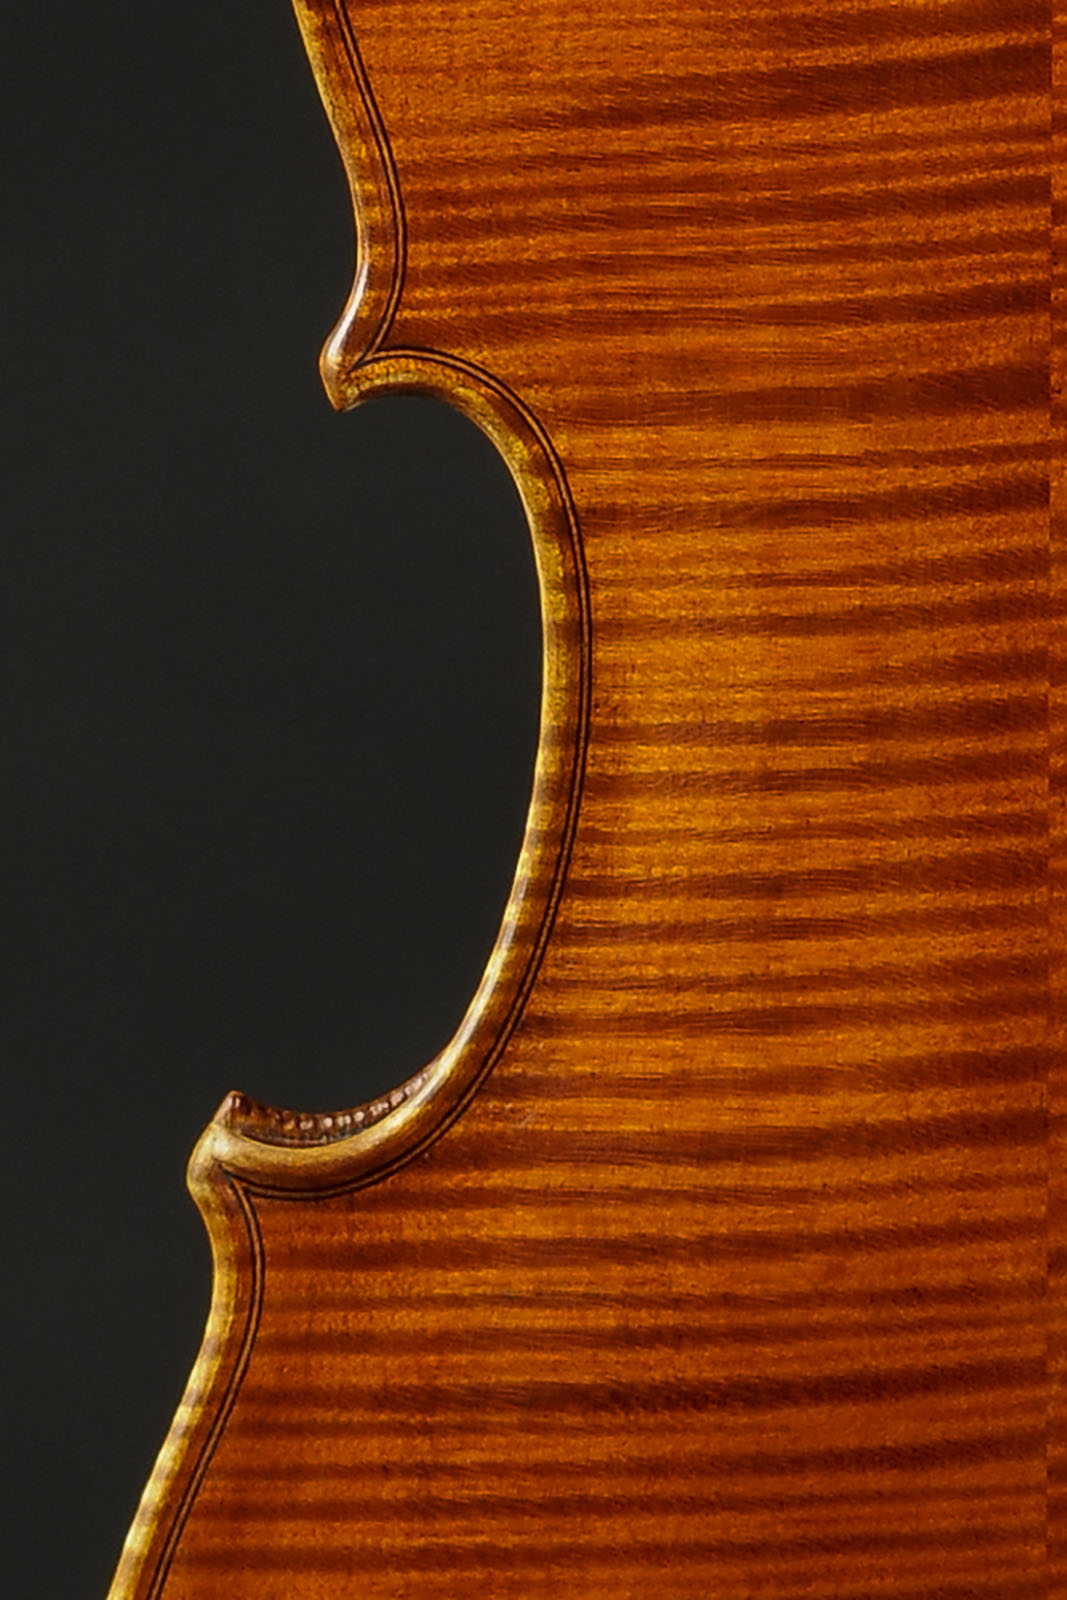 Antonio Stradivari Cremona 1715 “Forma G“ - Image 6